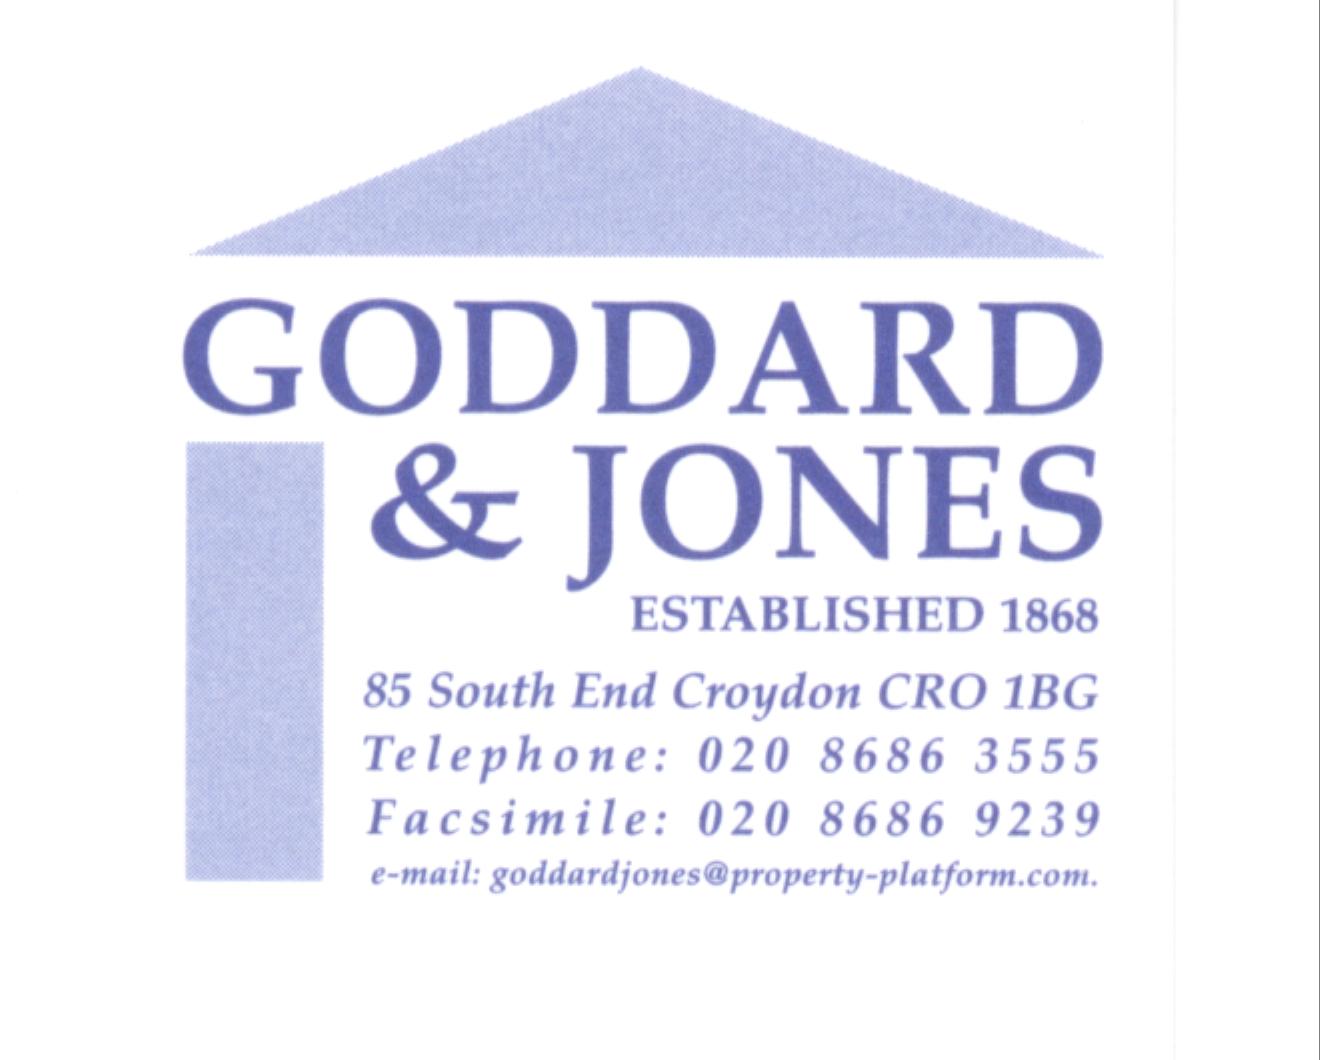 Goddard & Jones